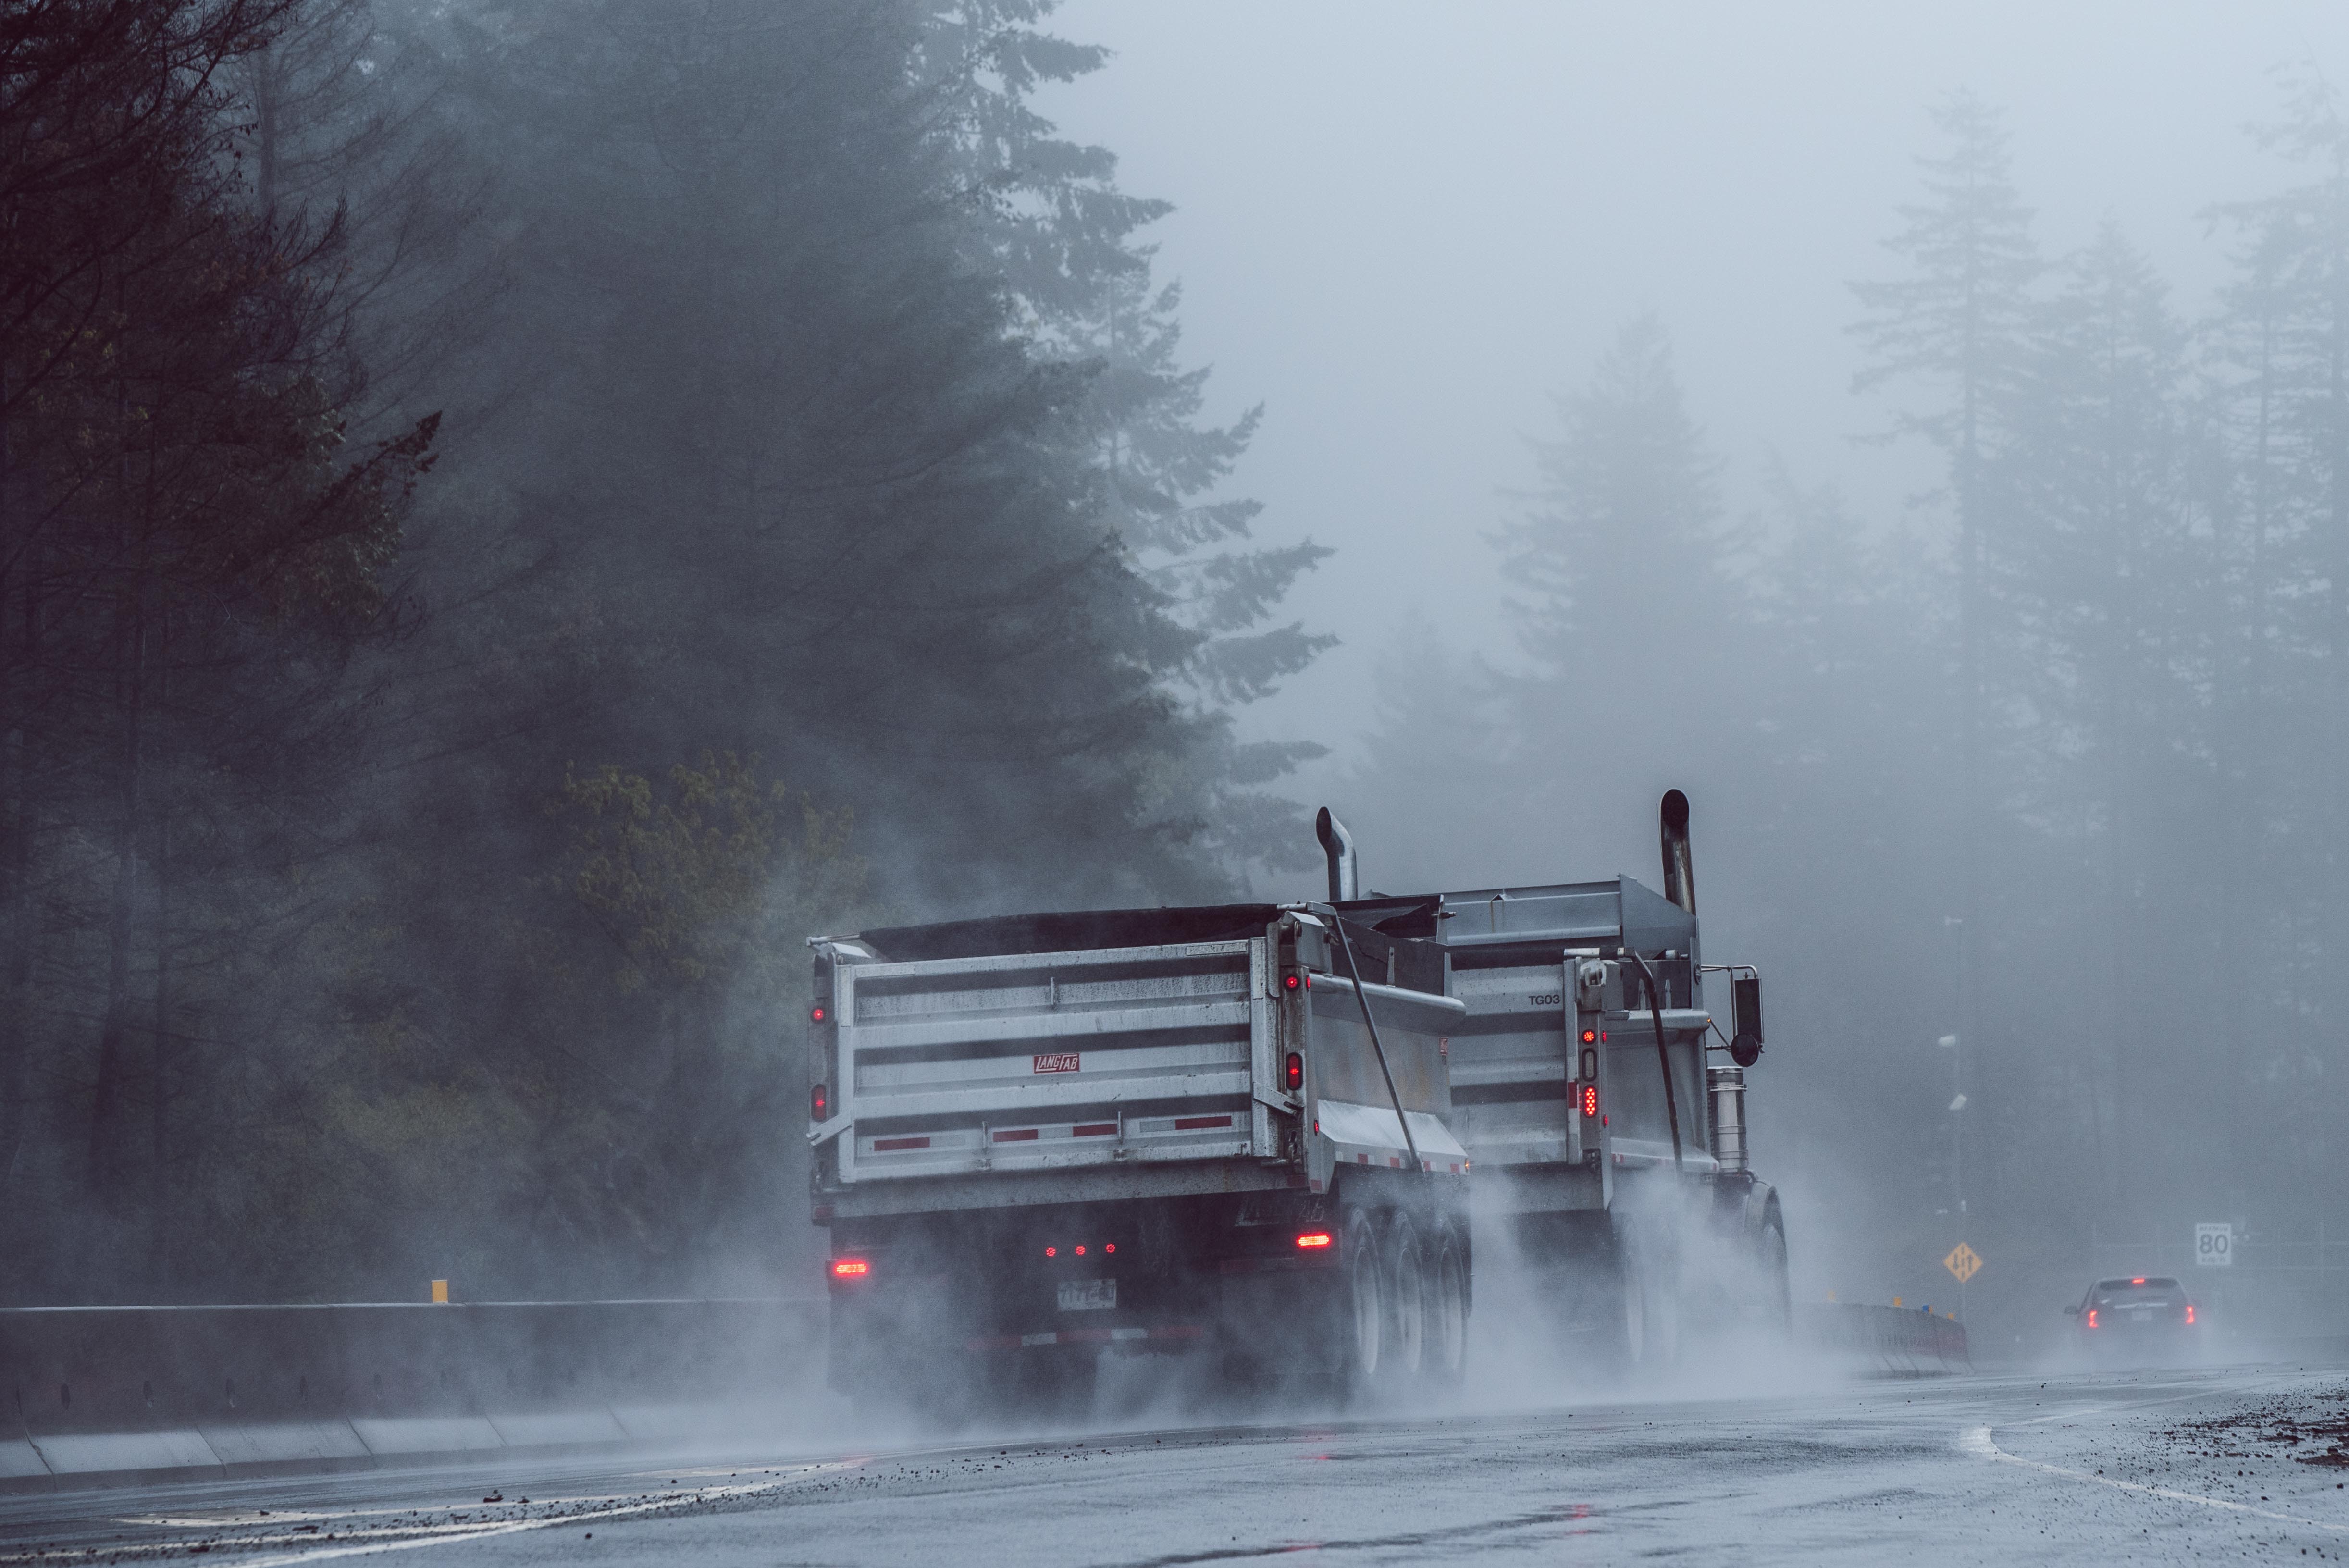 Gravel hauler on the road in the rain; image by Vlad Vasnetsov, via Unsplash.com.